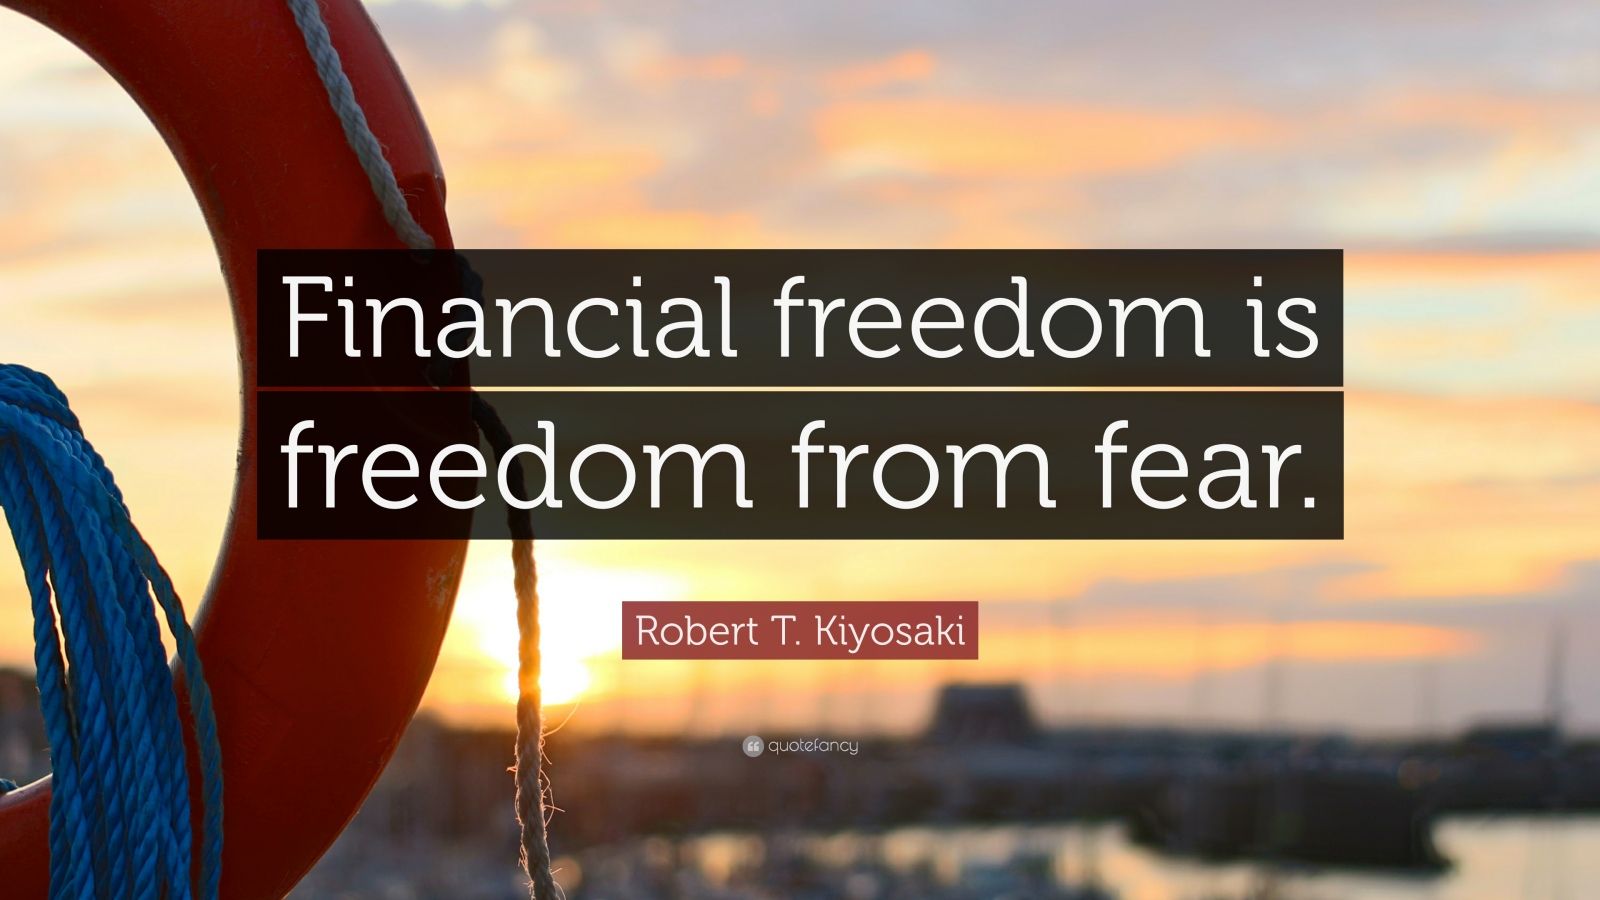 Robert T. Kiyosaki Quote “Financial freedom is freedom